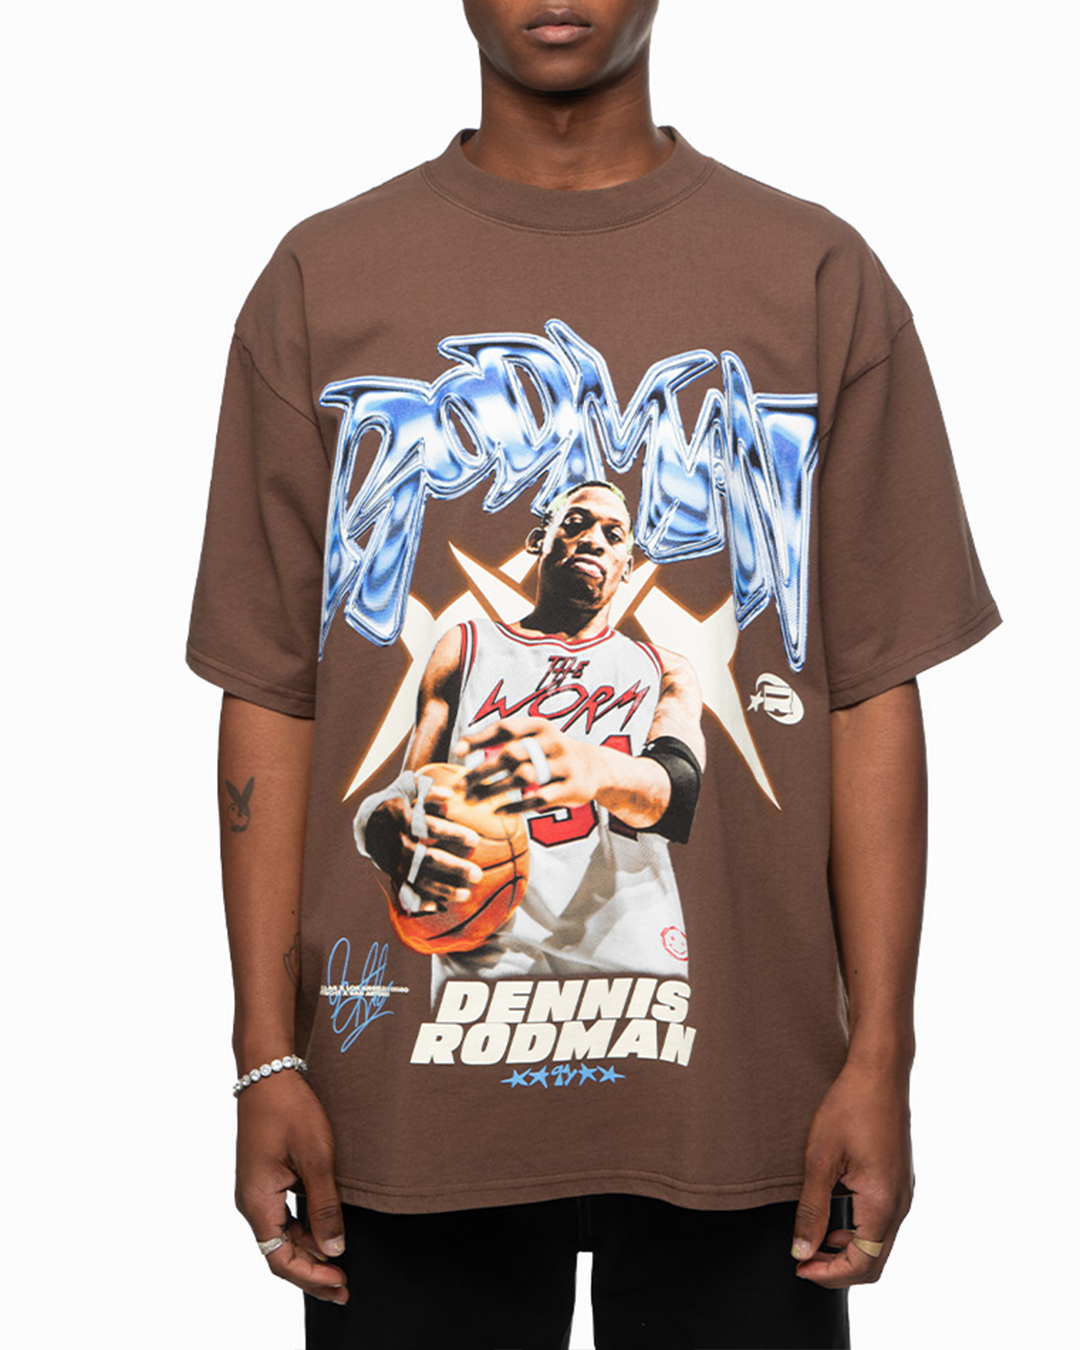 Dennis Rodman The Worm Shirt - T-shirts Low Price